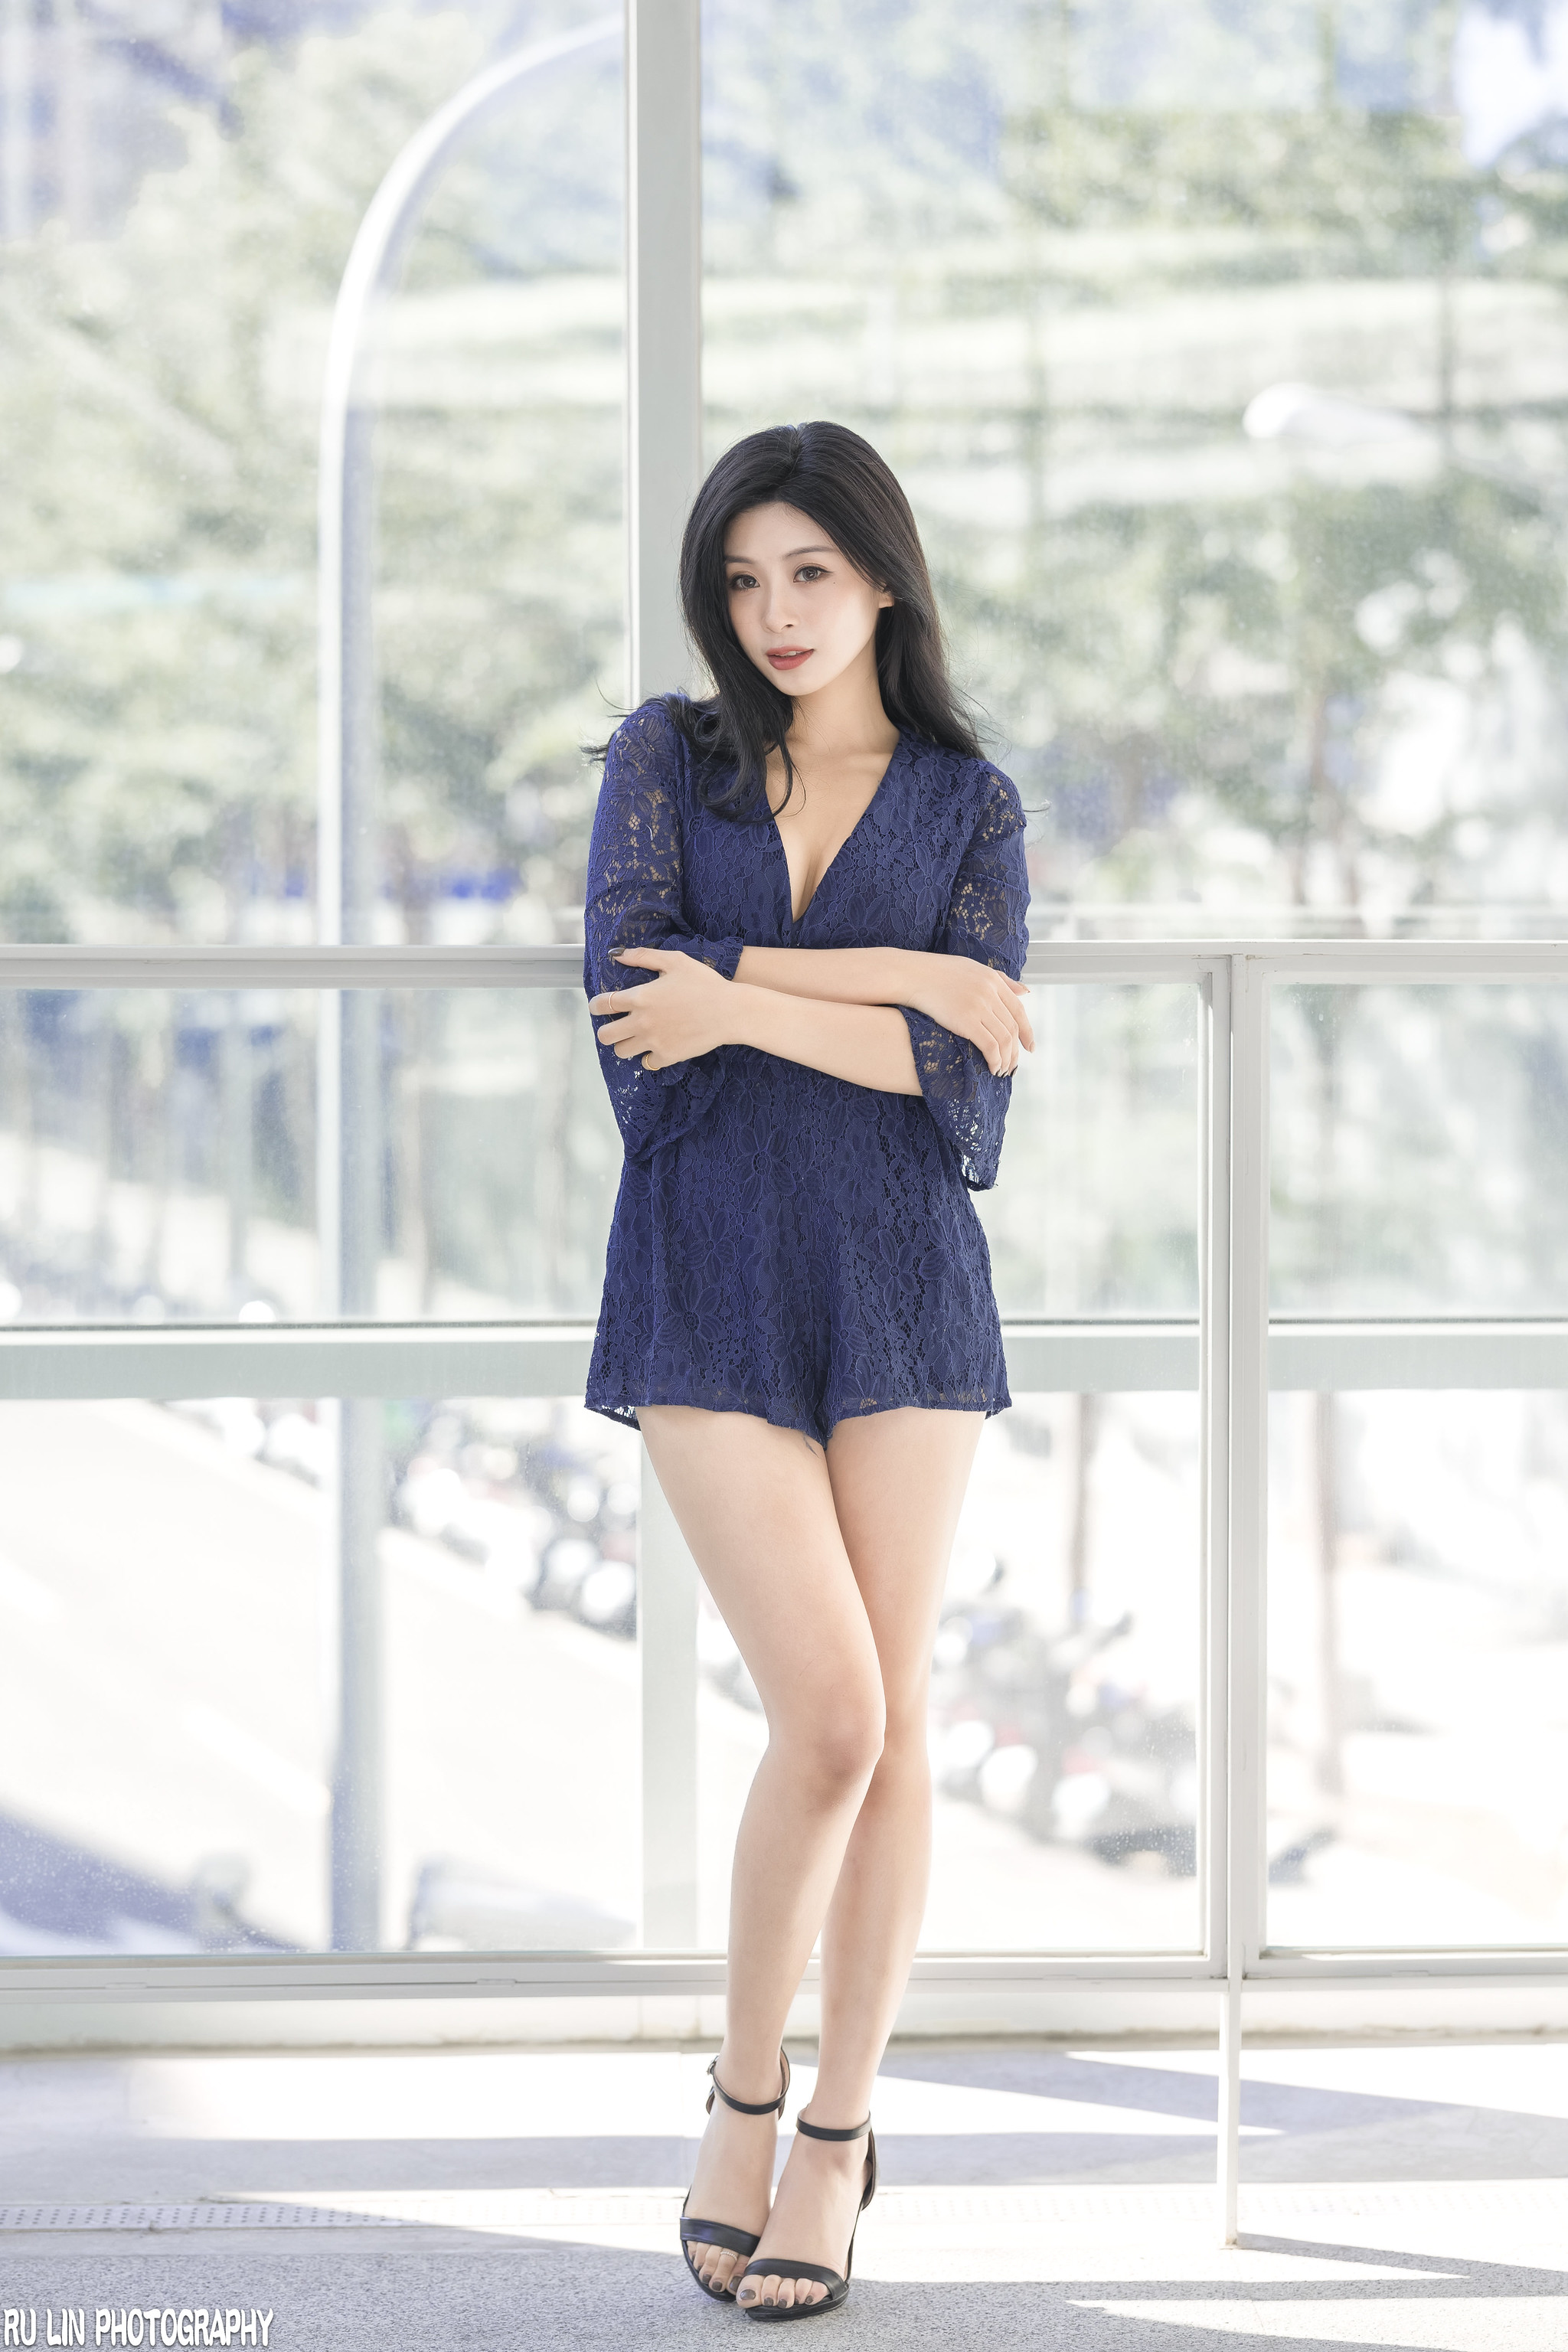 Women Dark Hair Asian PinQ Blue Clothing Arms Crossed Bright Legs Legs Together 2048x3072